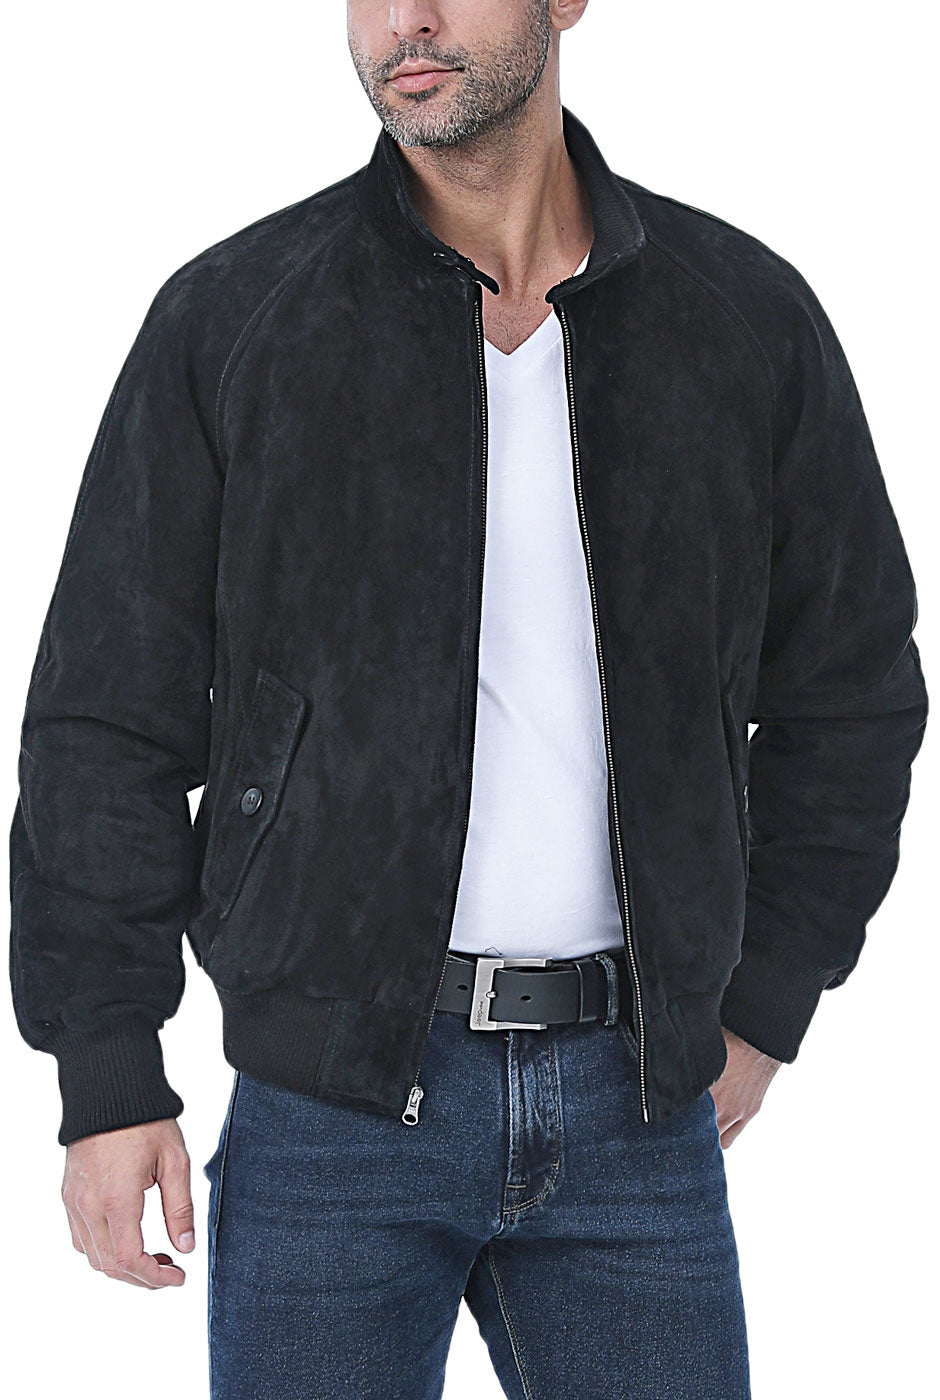 KingSize Men's Big & Tall Embossed Leather Bomber Jacket